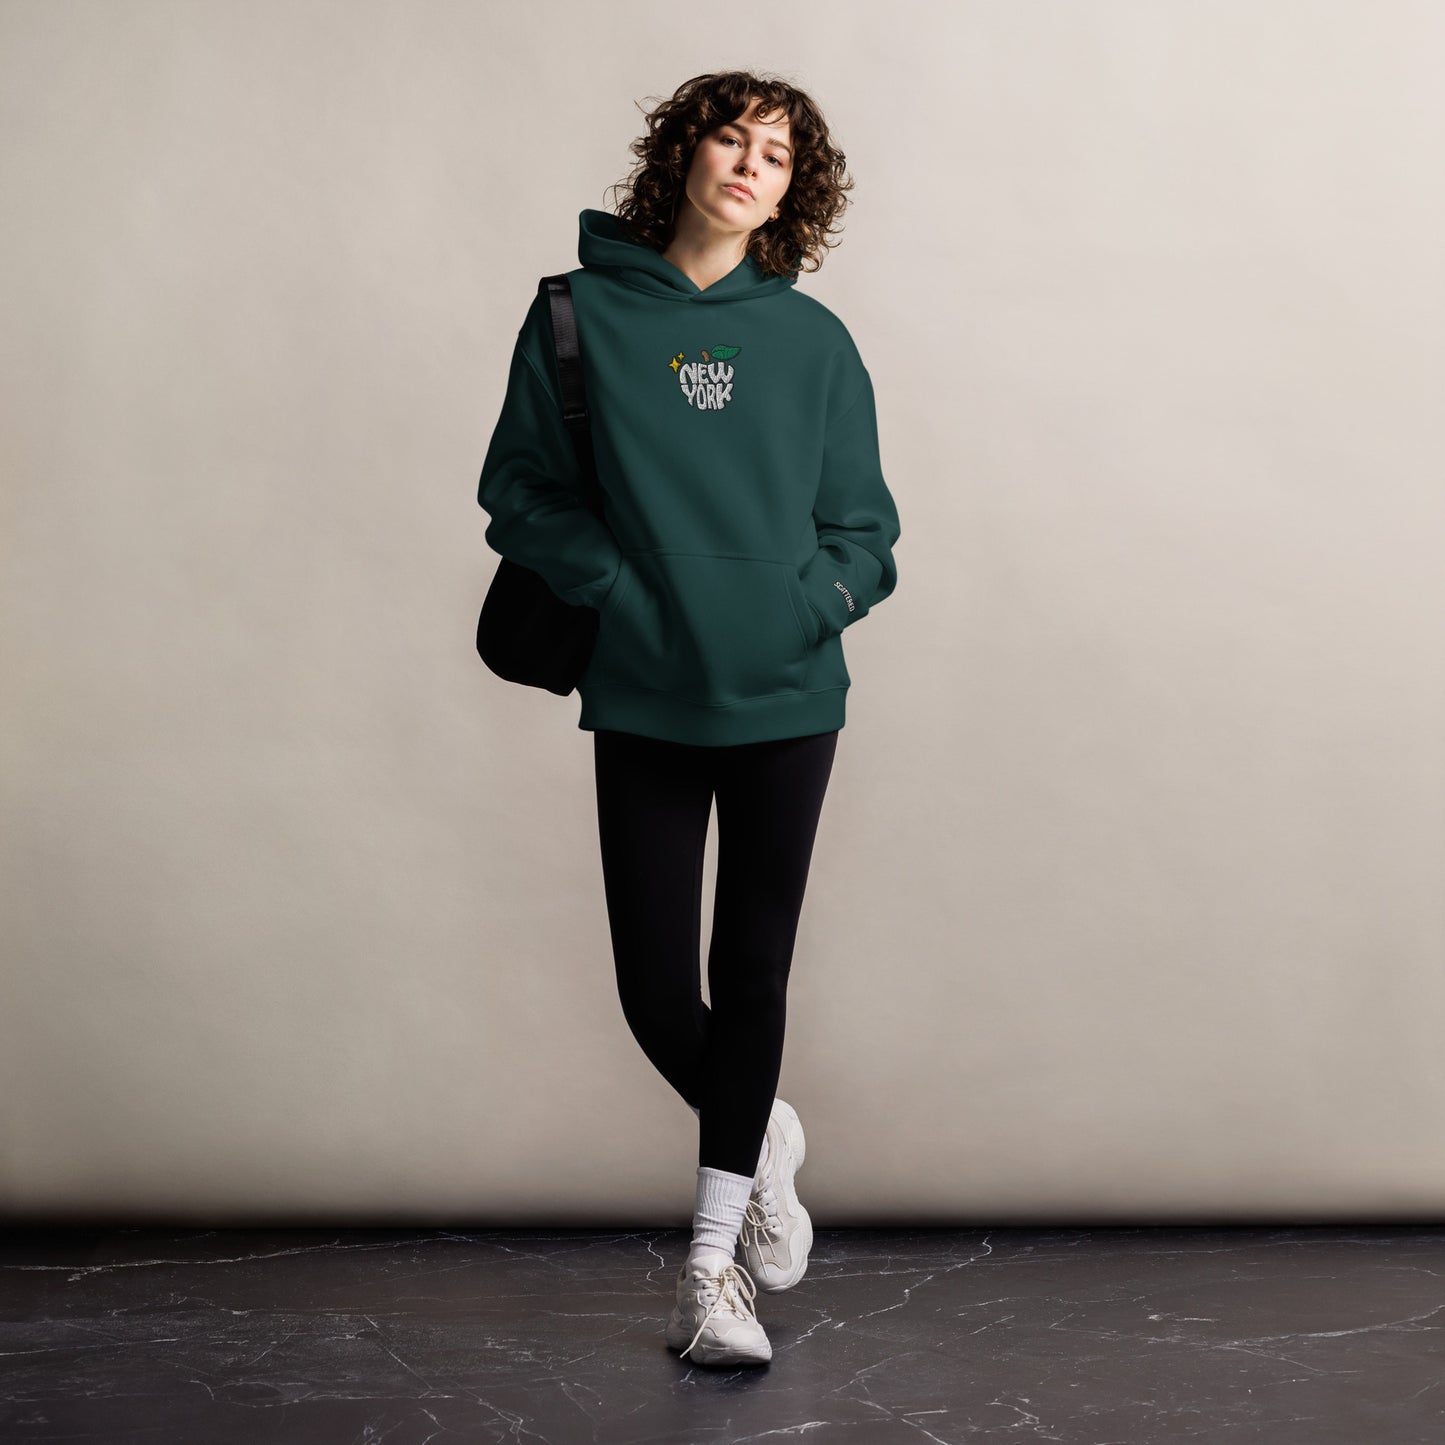 New York Apple Logo Embroidered Spruce Green Streetwear Hoodie Sweatshirt | Scattered